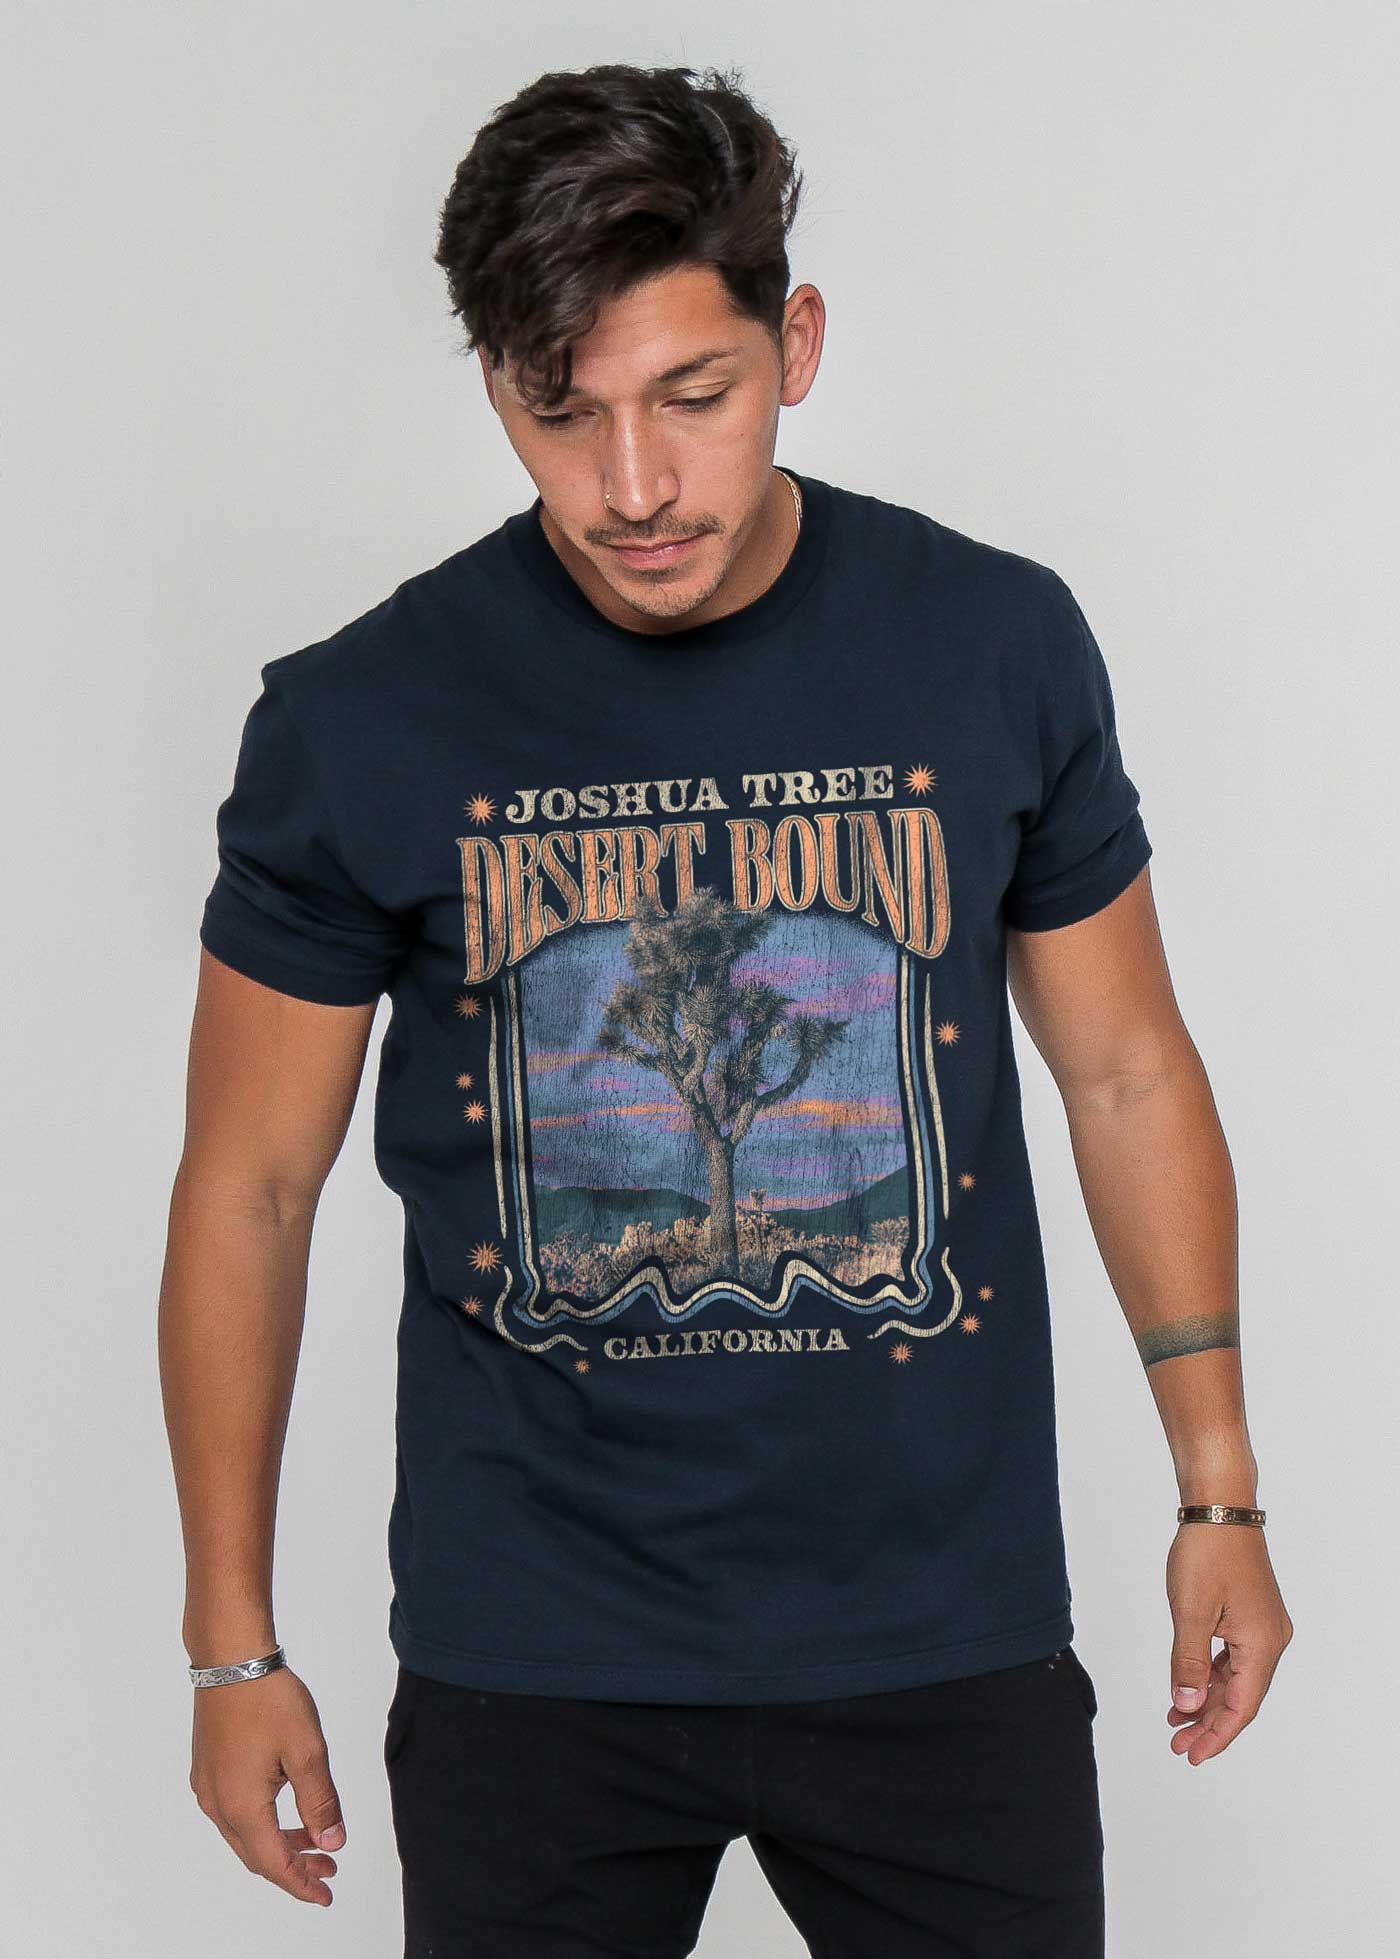 Capital Clothing USA Cactus Jack Collection Men's Vintage T-Shirt, Joshua  Tree